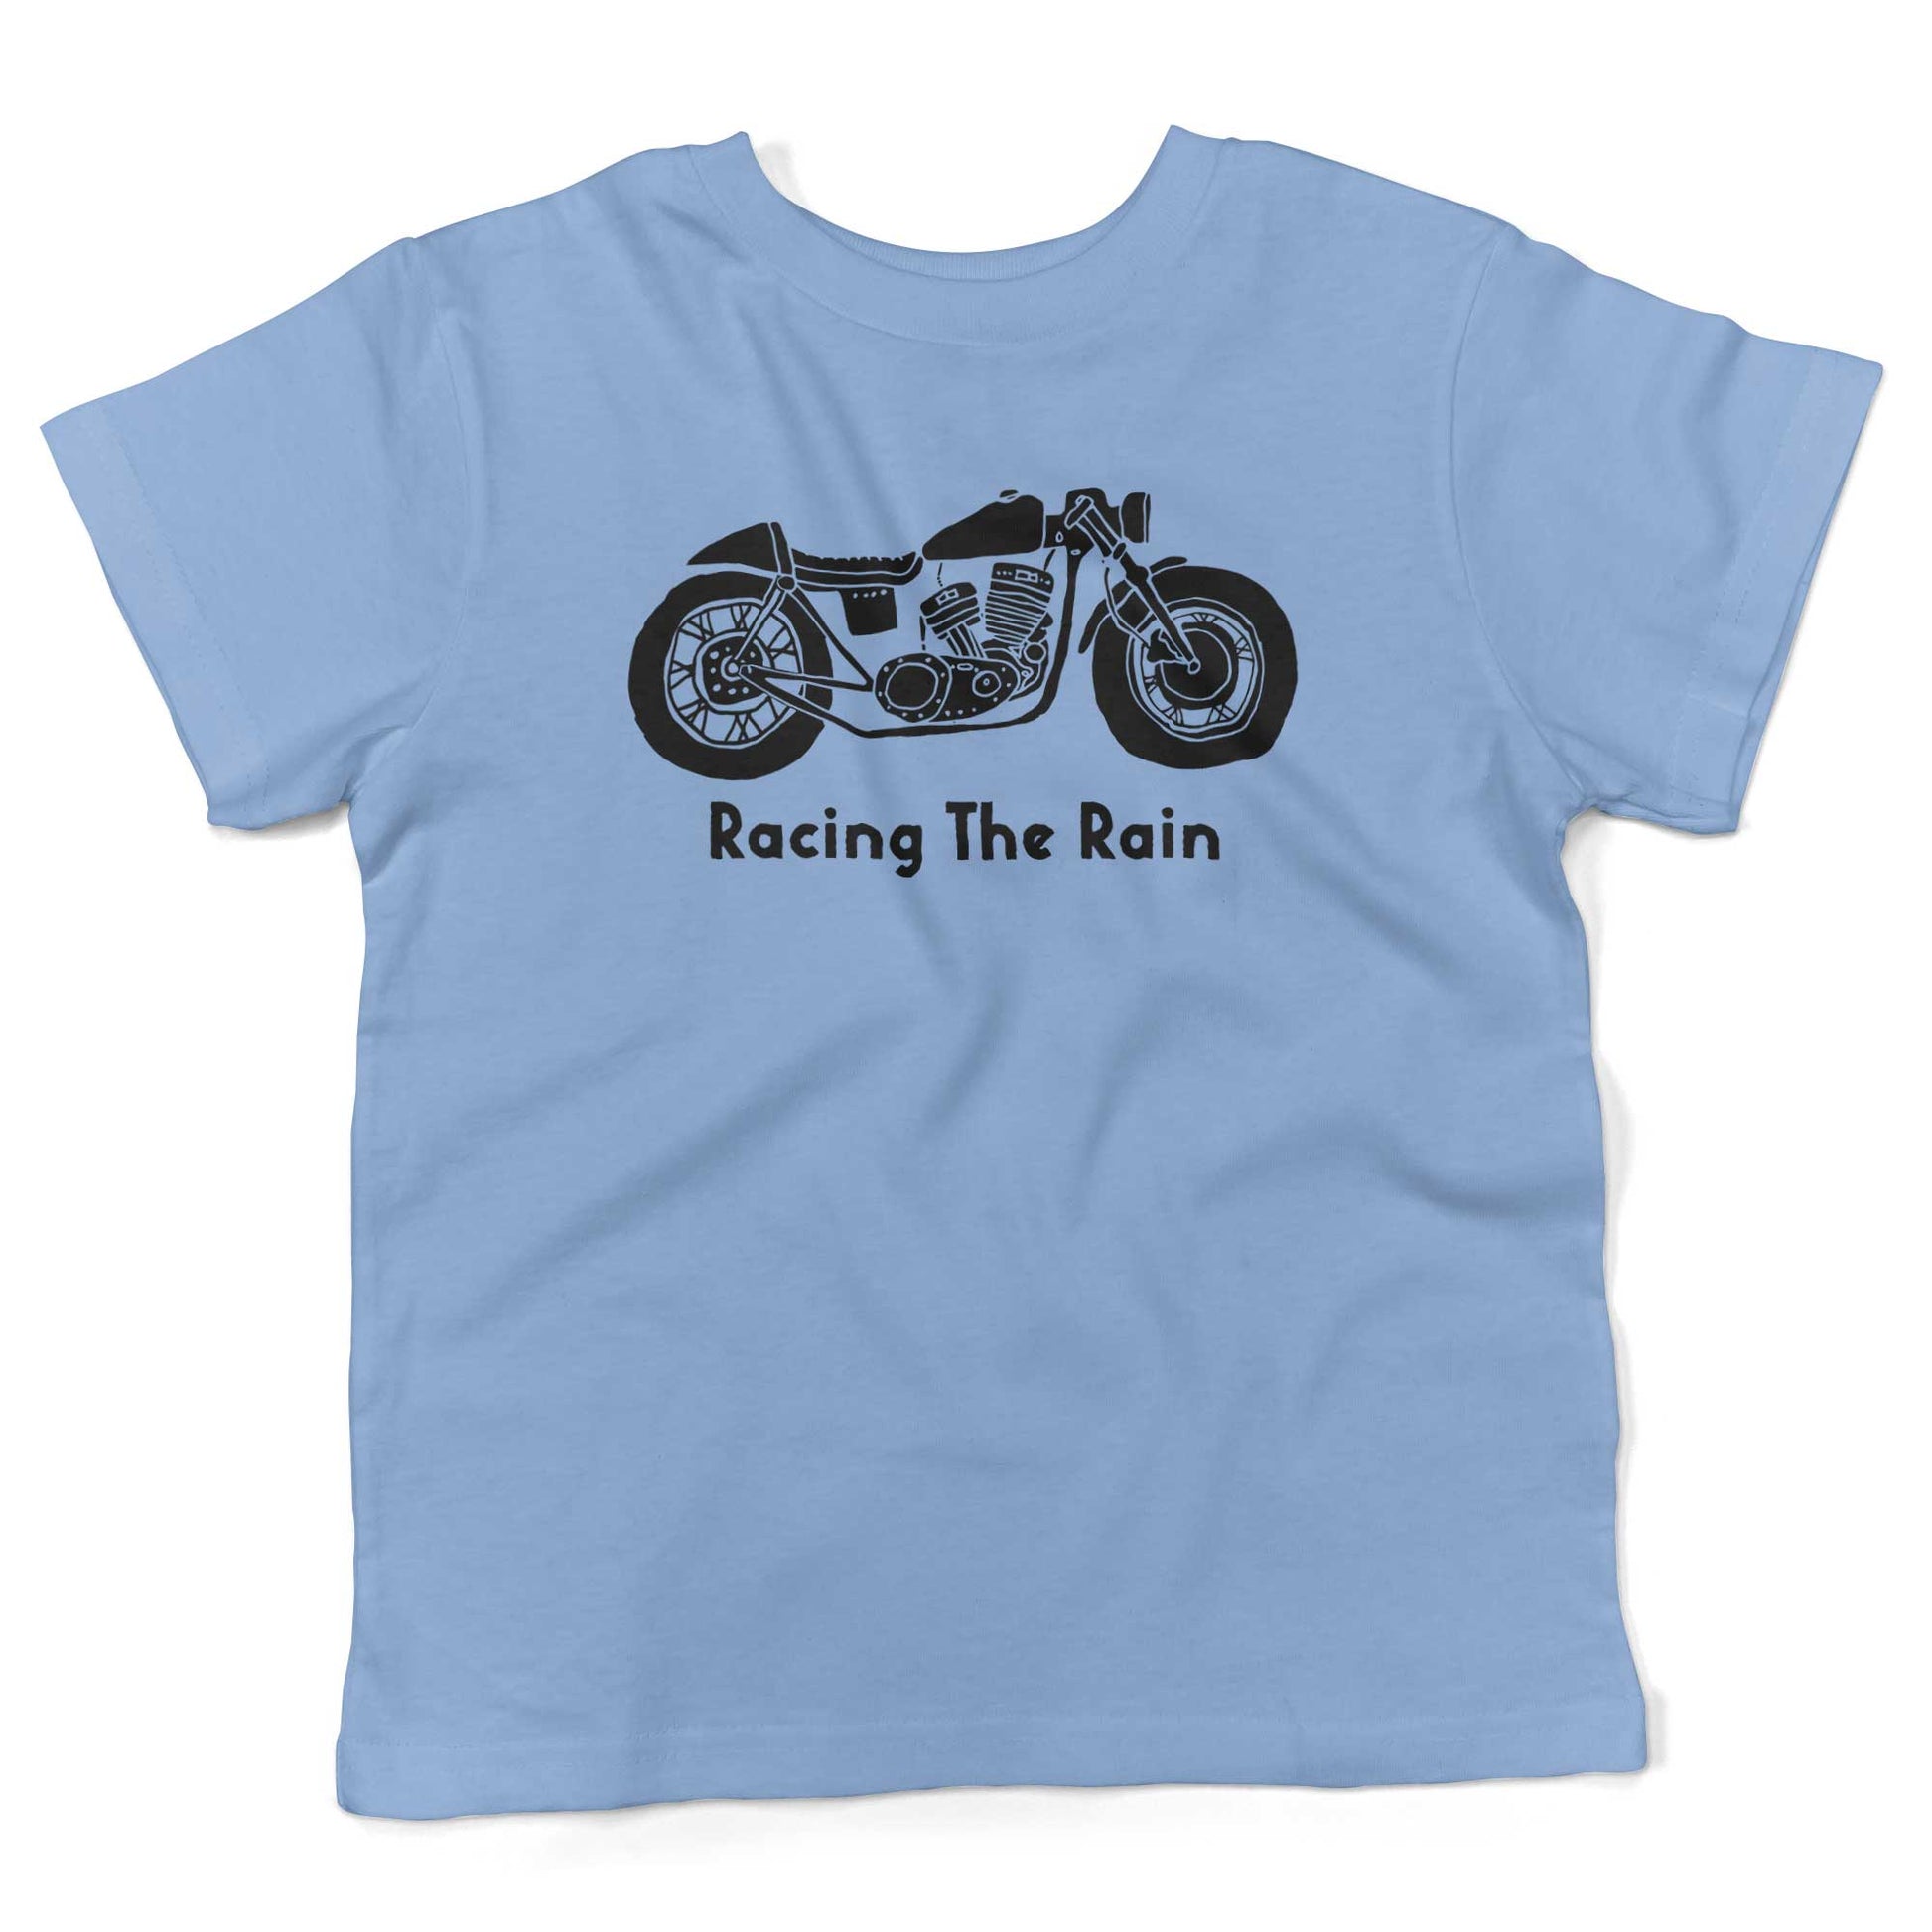 Racing The Rain Toddler Shirt-Organic Baby Blue-2T